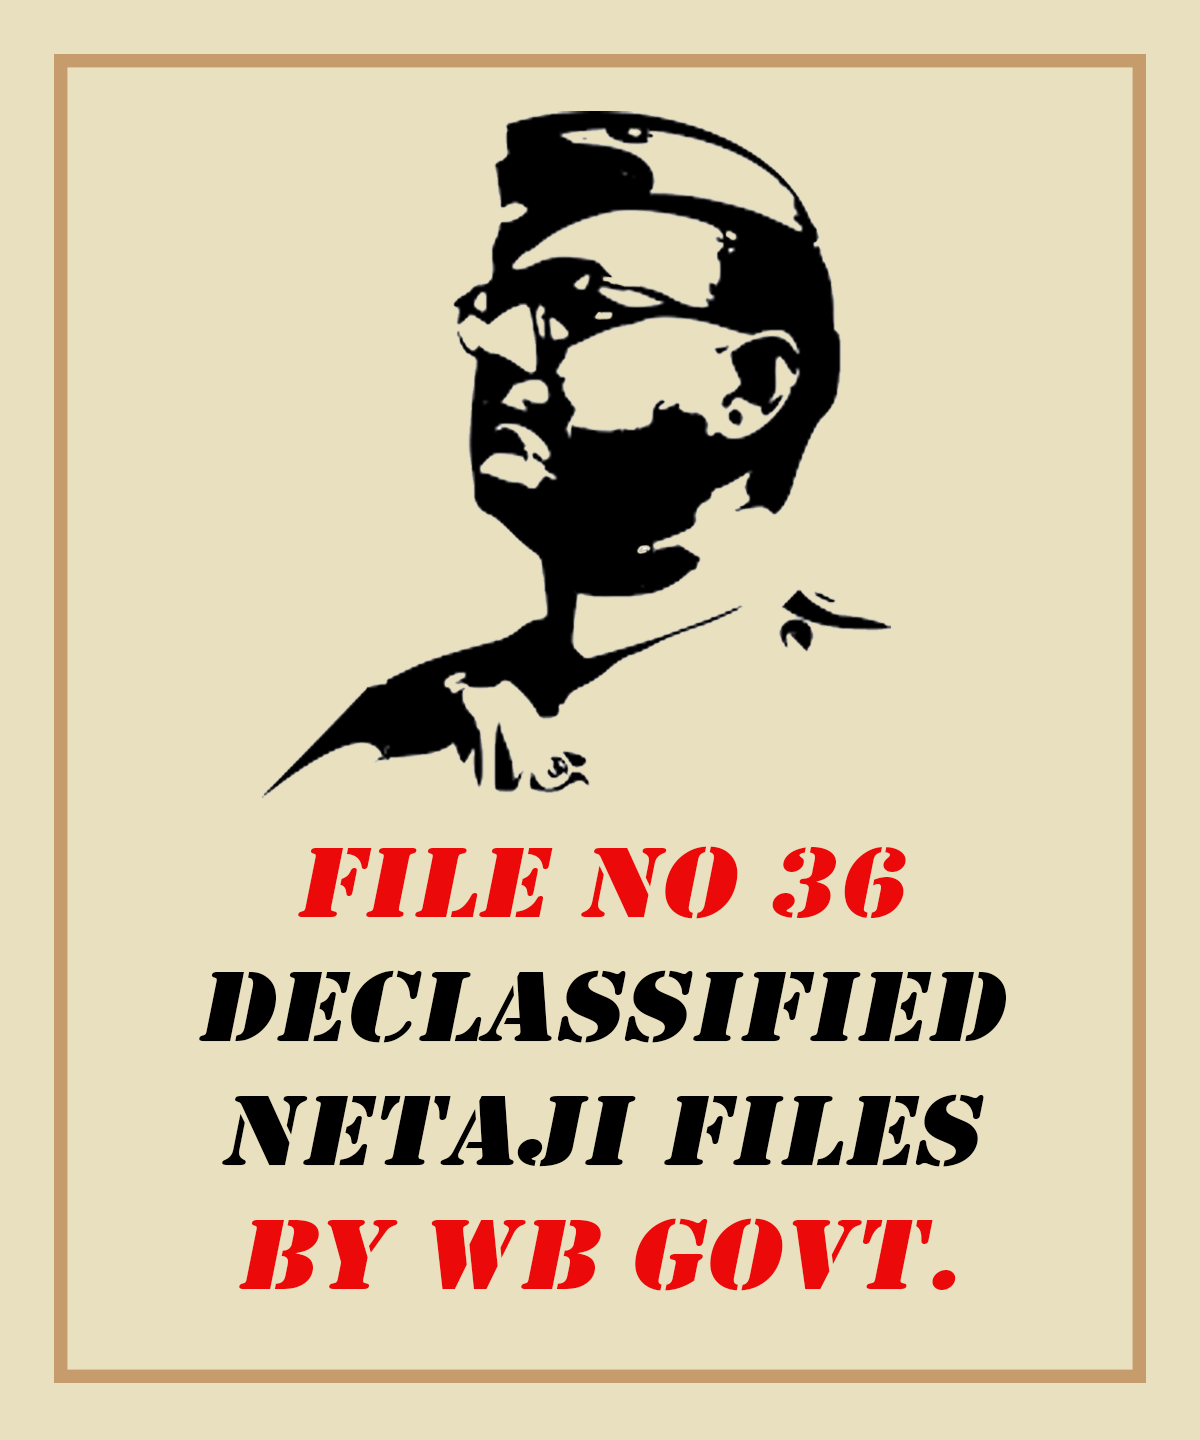 Declassified files of Netaji No.36 by WB Govt.